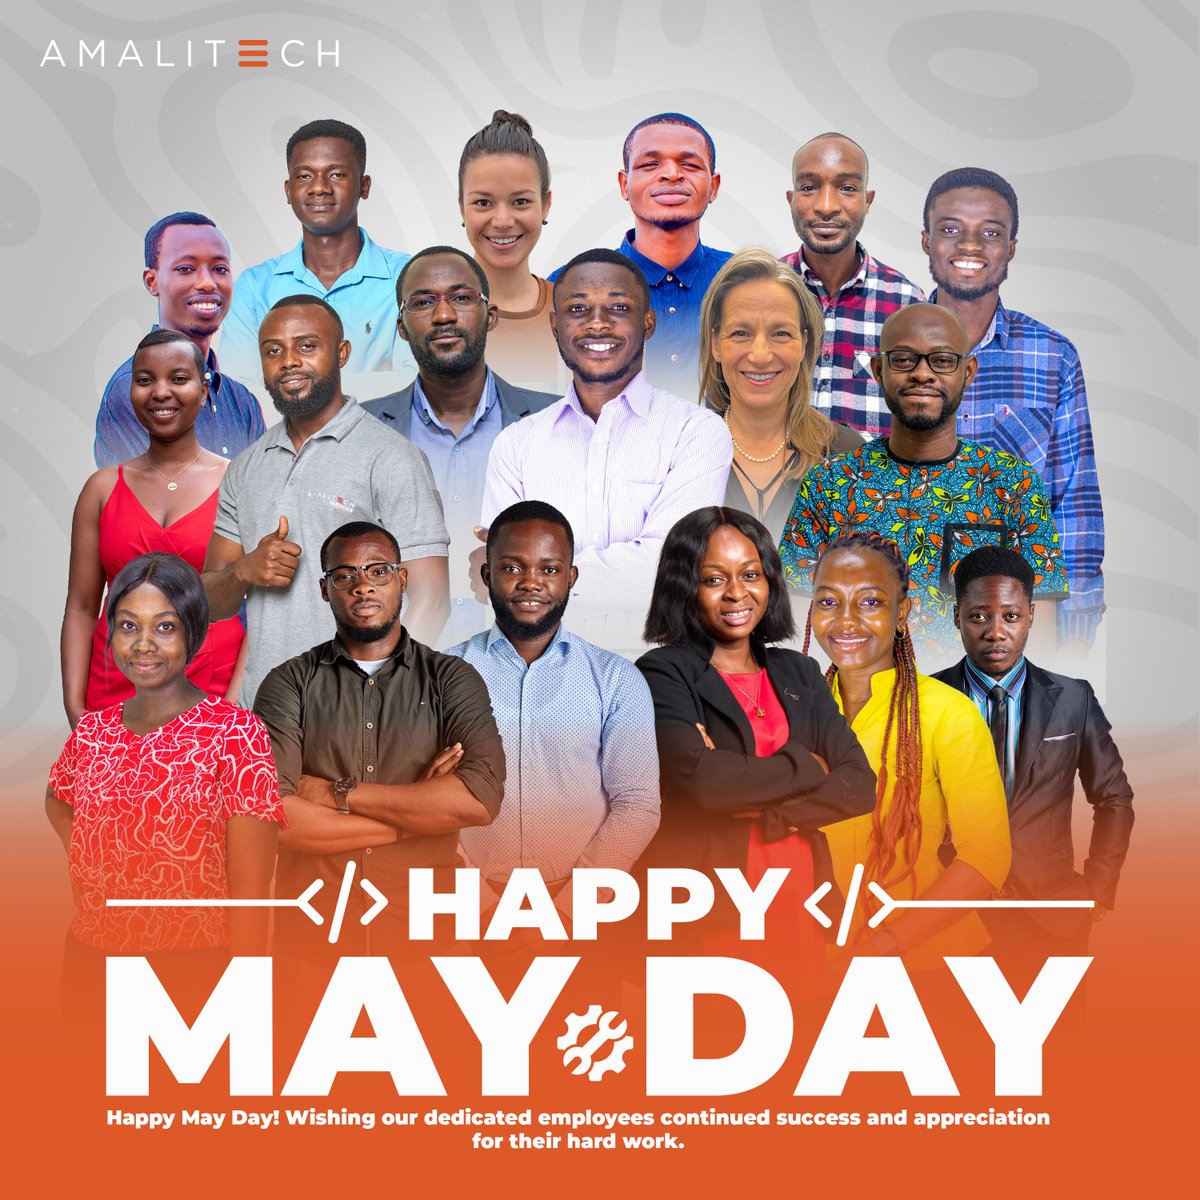 Wishing all workers across the world a joyful and restorative May Day! 

 #WorkwithAmaliTech #HappyMayDay